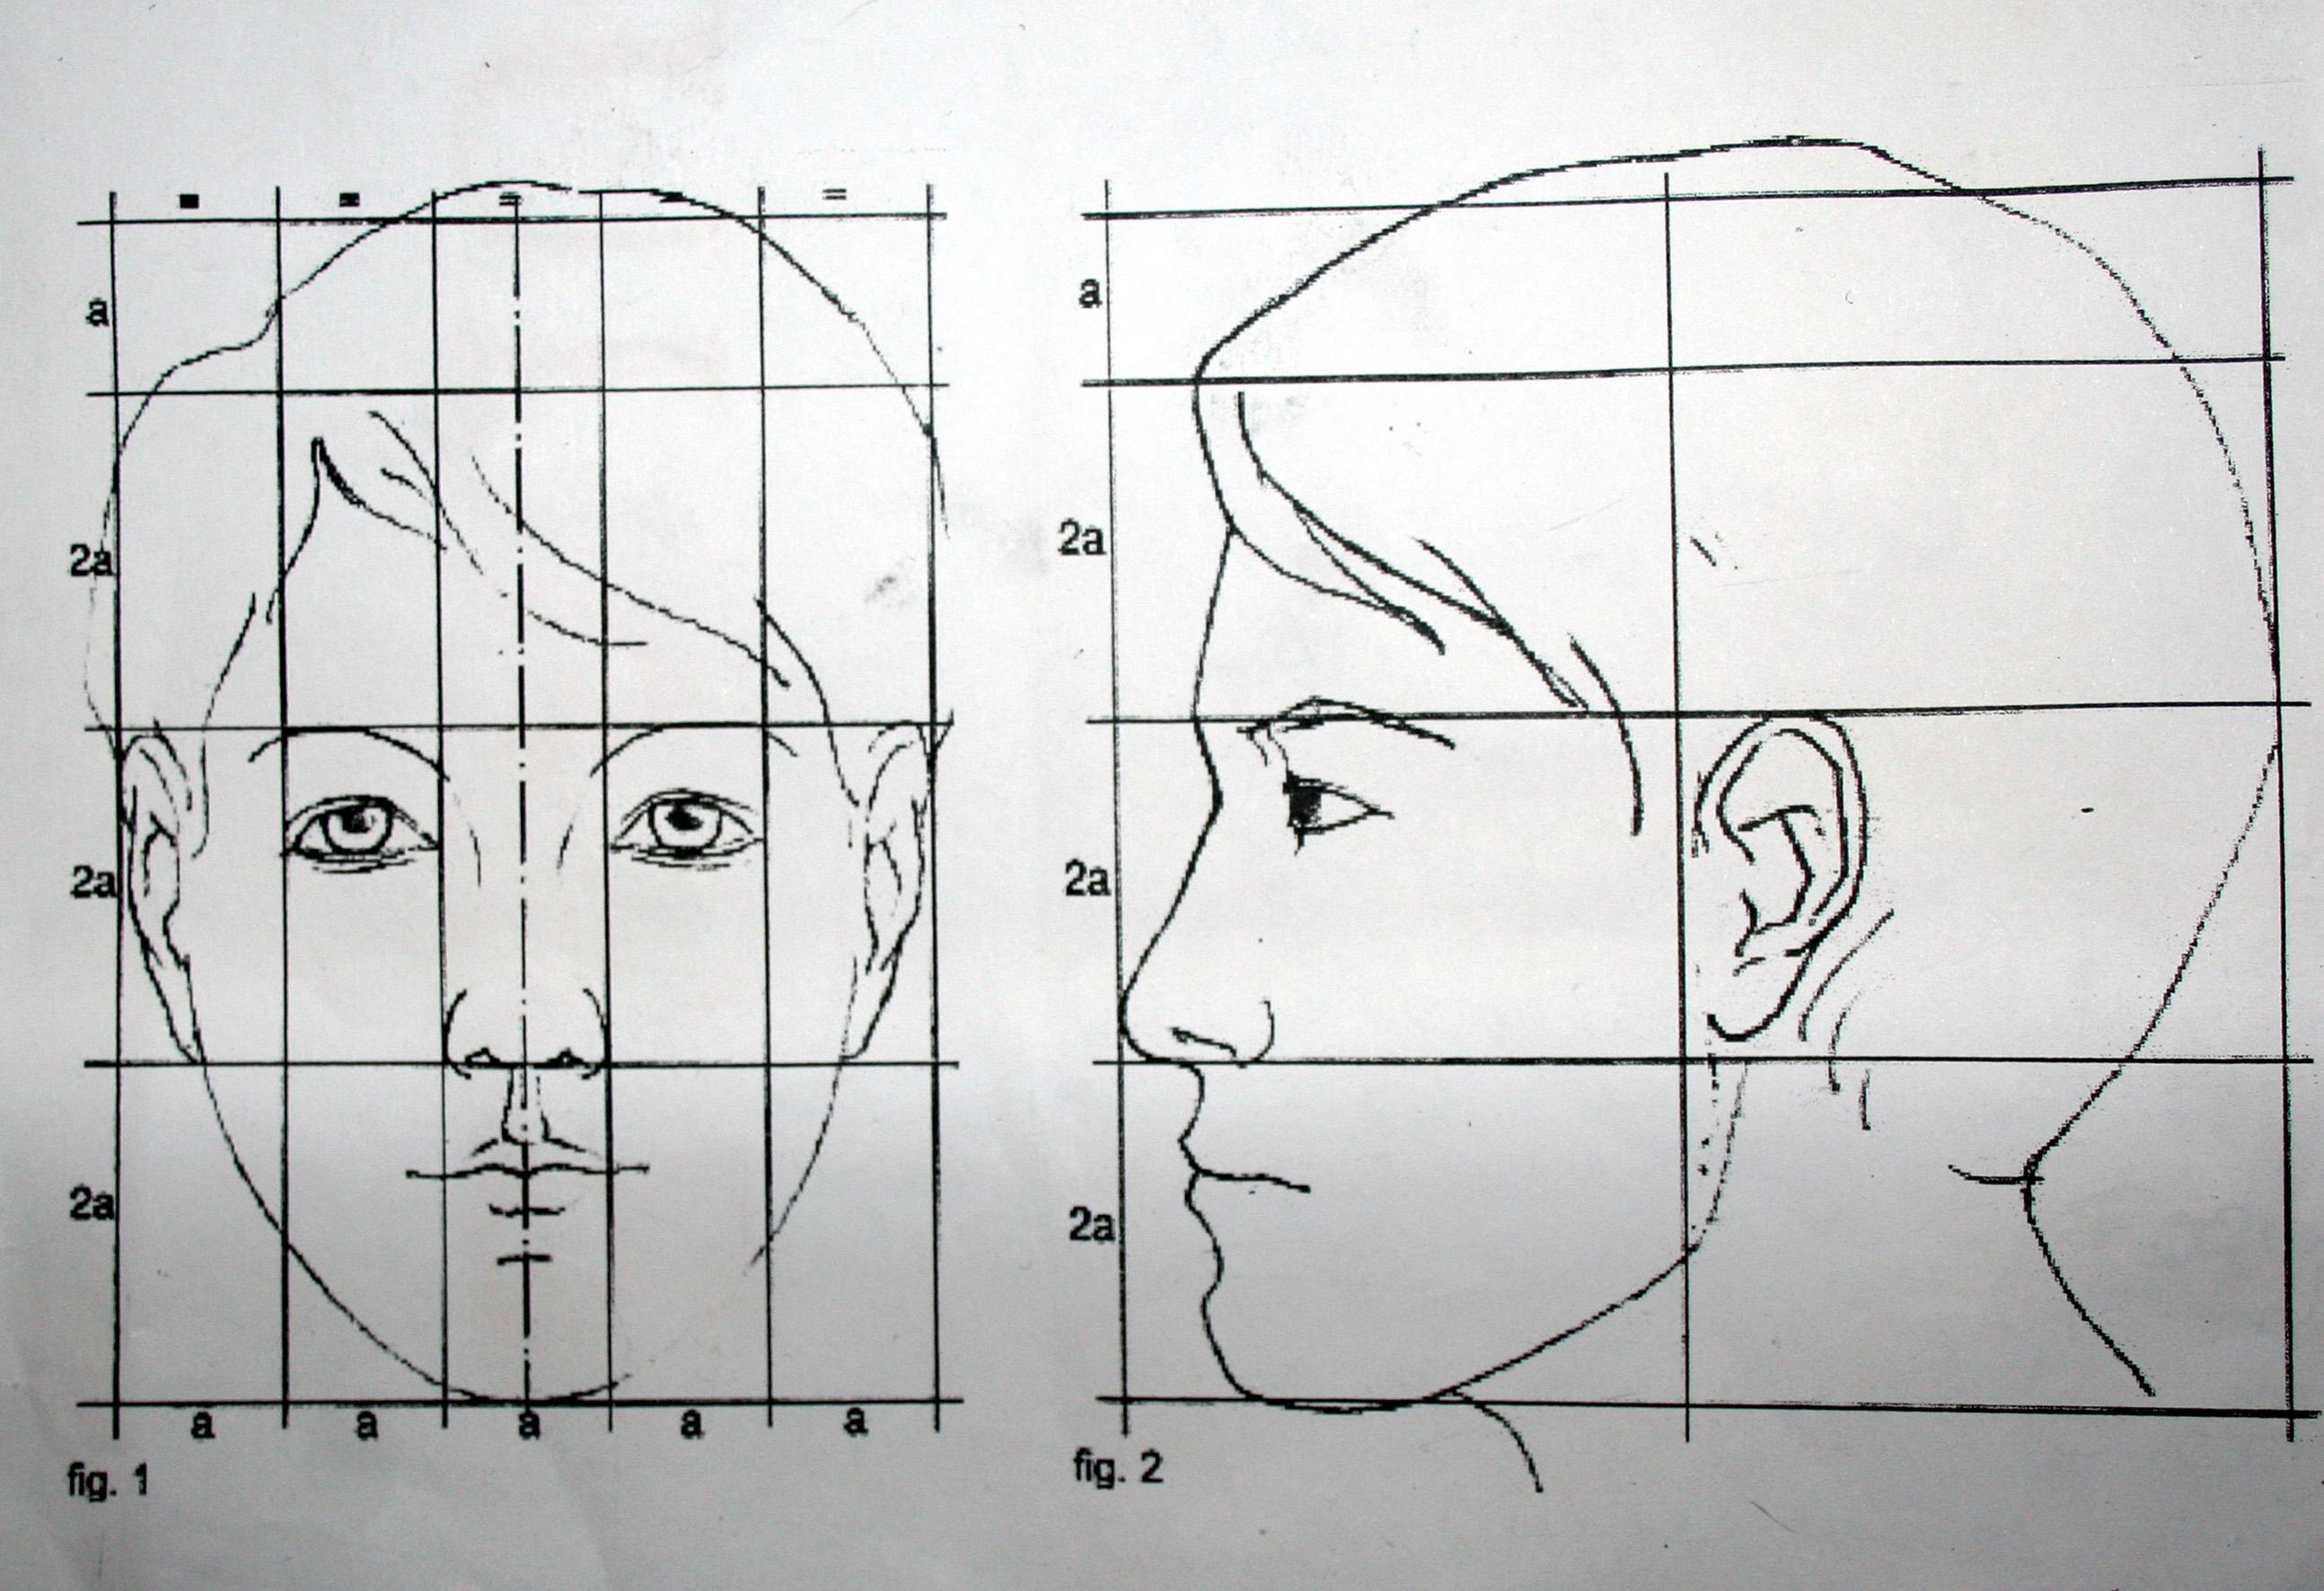 Портрет человека 4 класс изо. Пропорции портрета человека профиль. Пропорции лица человека профиль и анфас. Портрет (конструкция головы человека. Анфас, профиль). Пропорции головы человека рисунок.